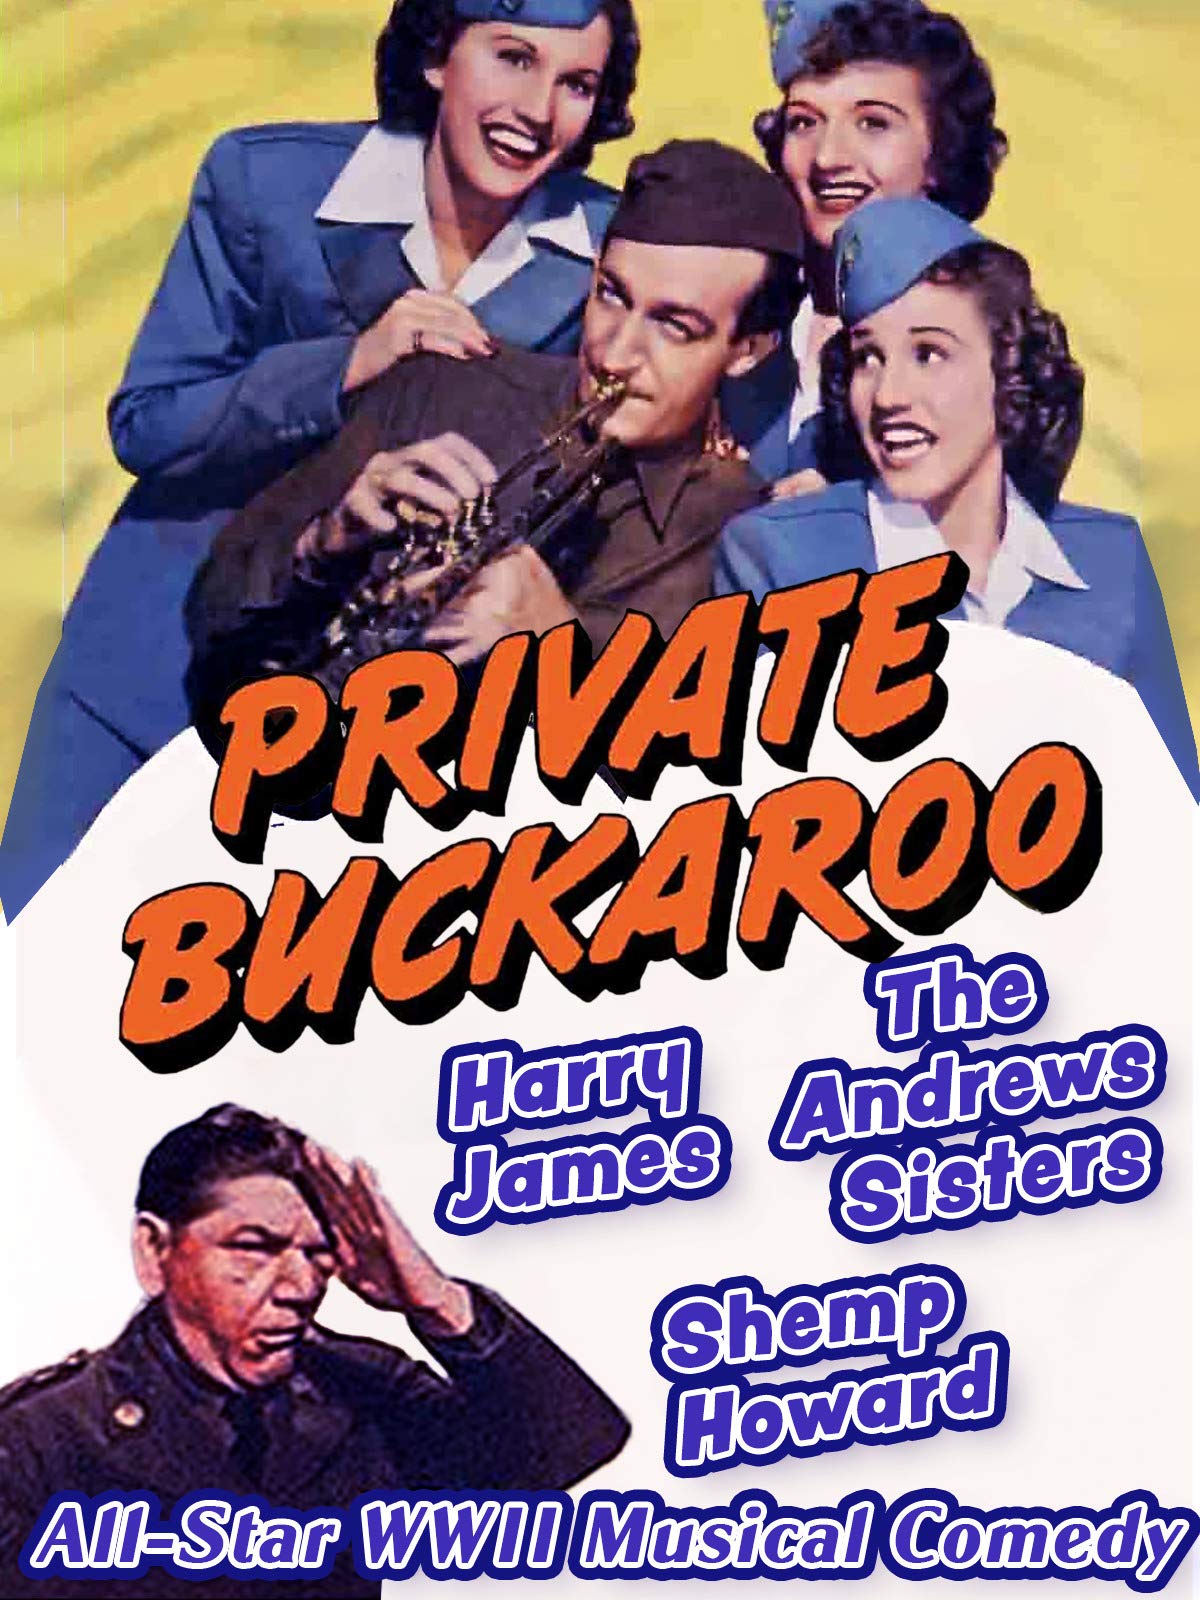 Private Buckaroon (1942) starring Harry James, Shemp Howard, The Andrews Sisters